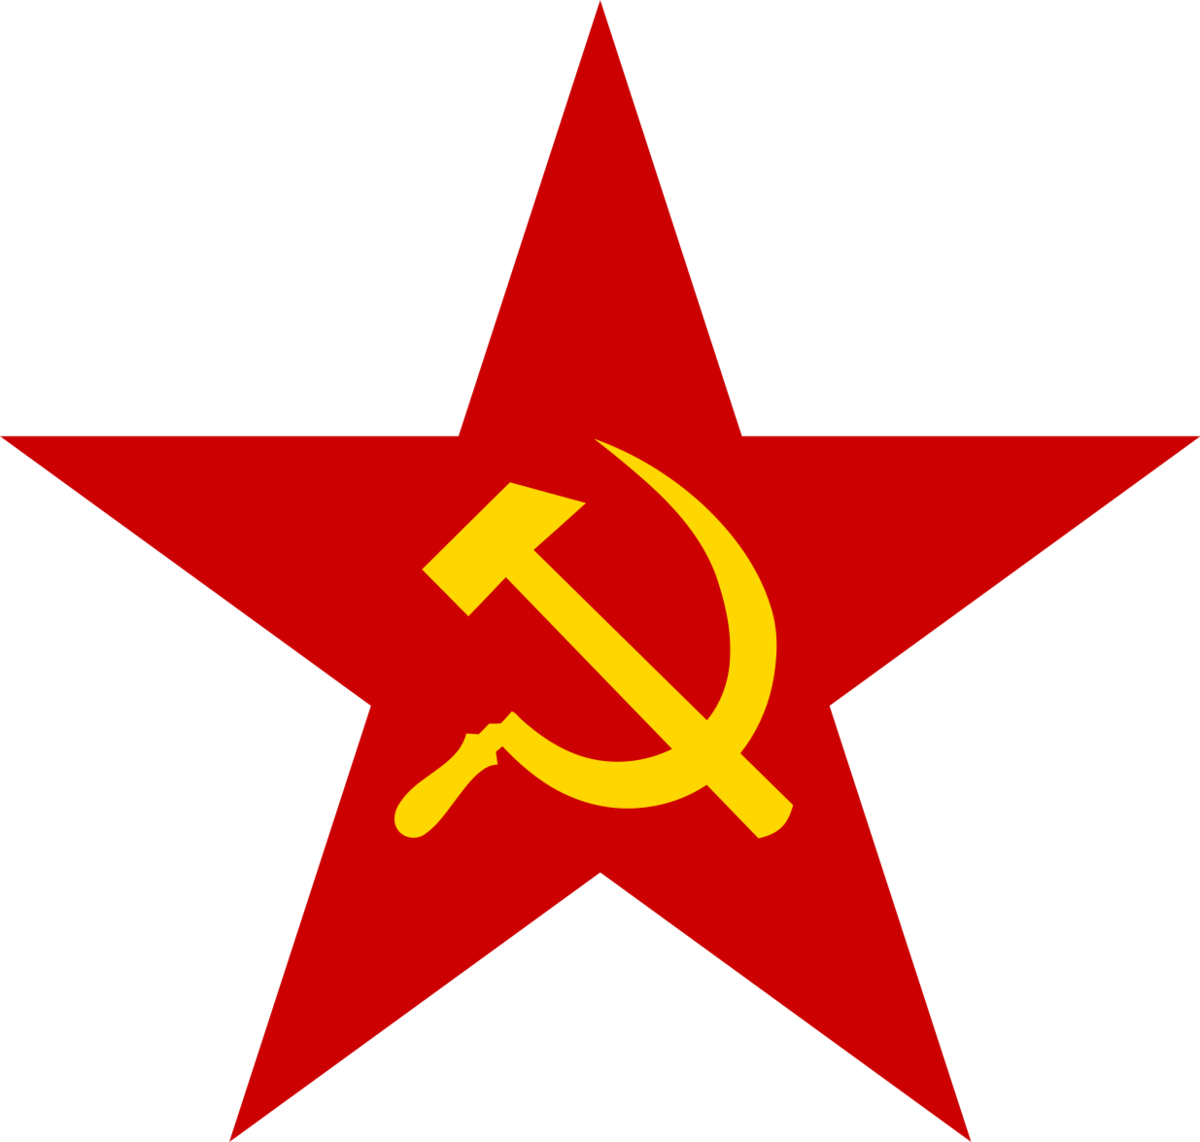 kommunisme – Store norske leksikon